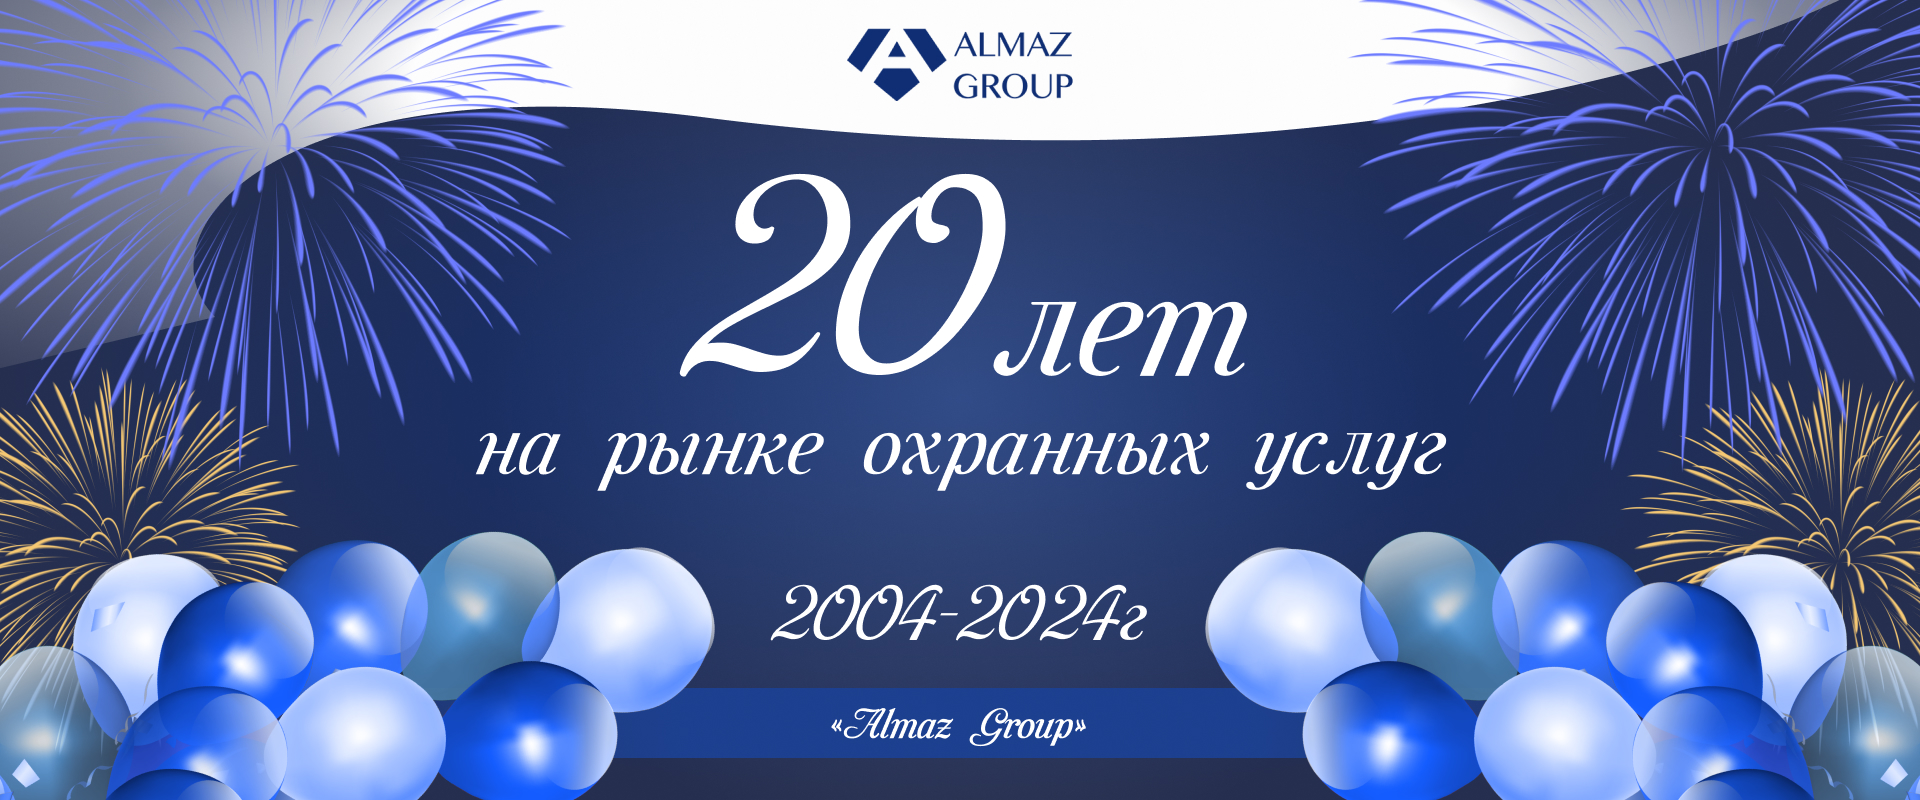 Almaz20